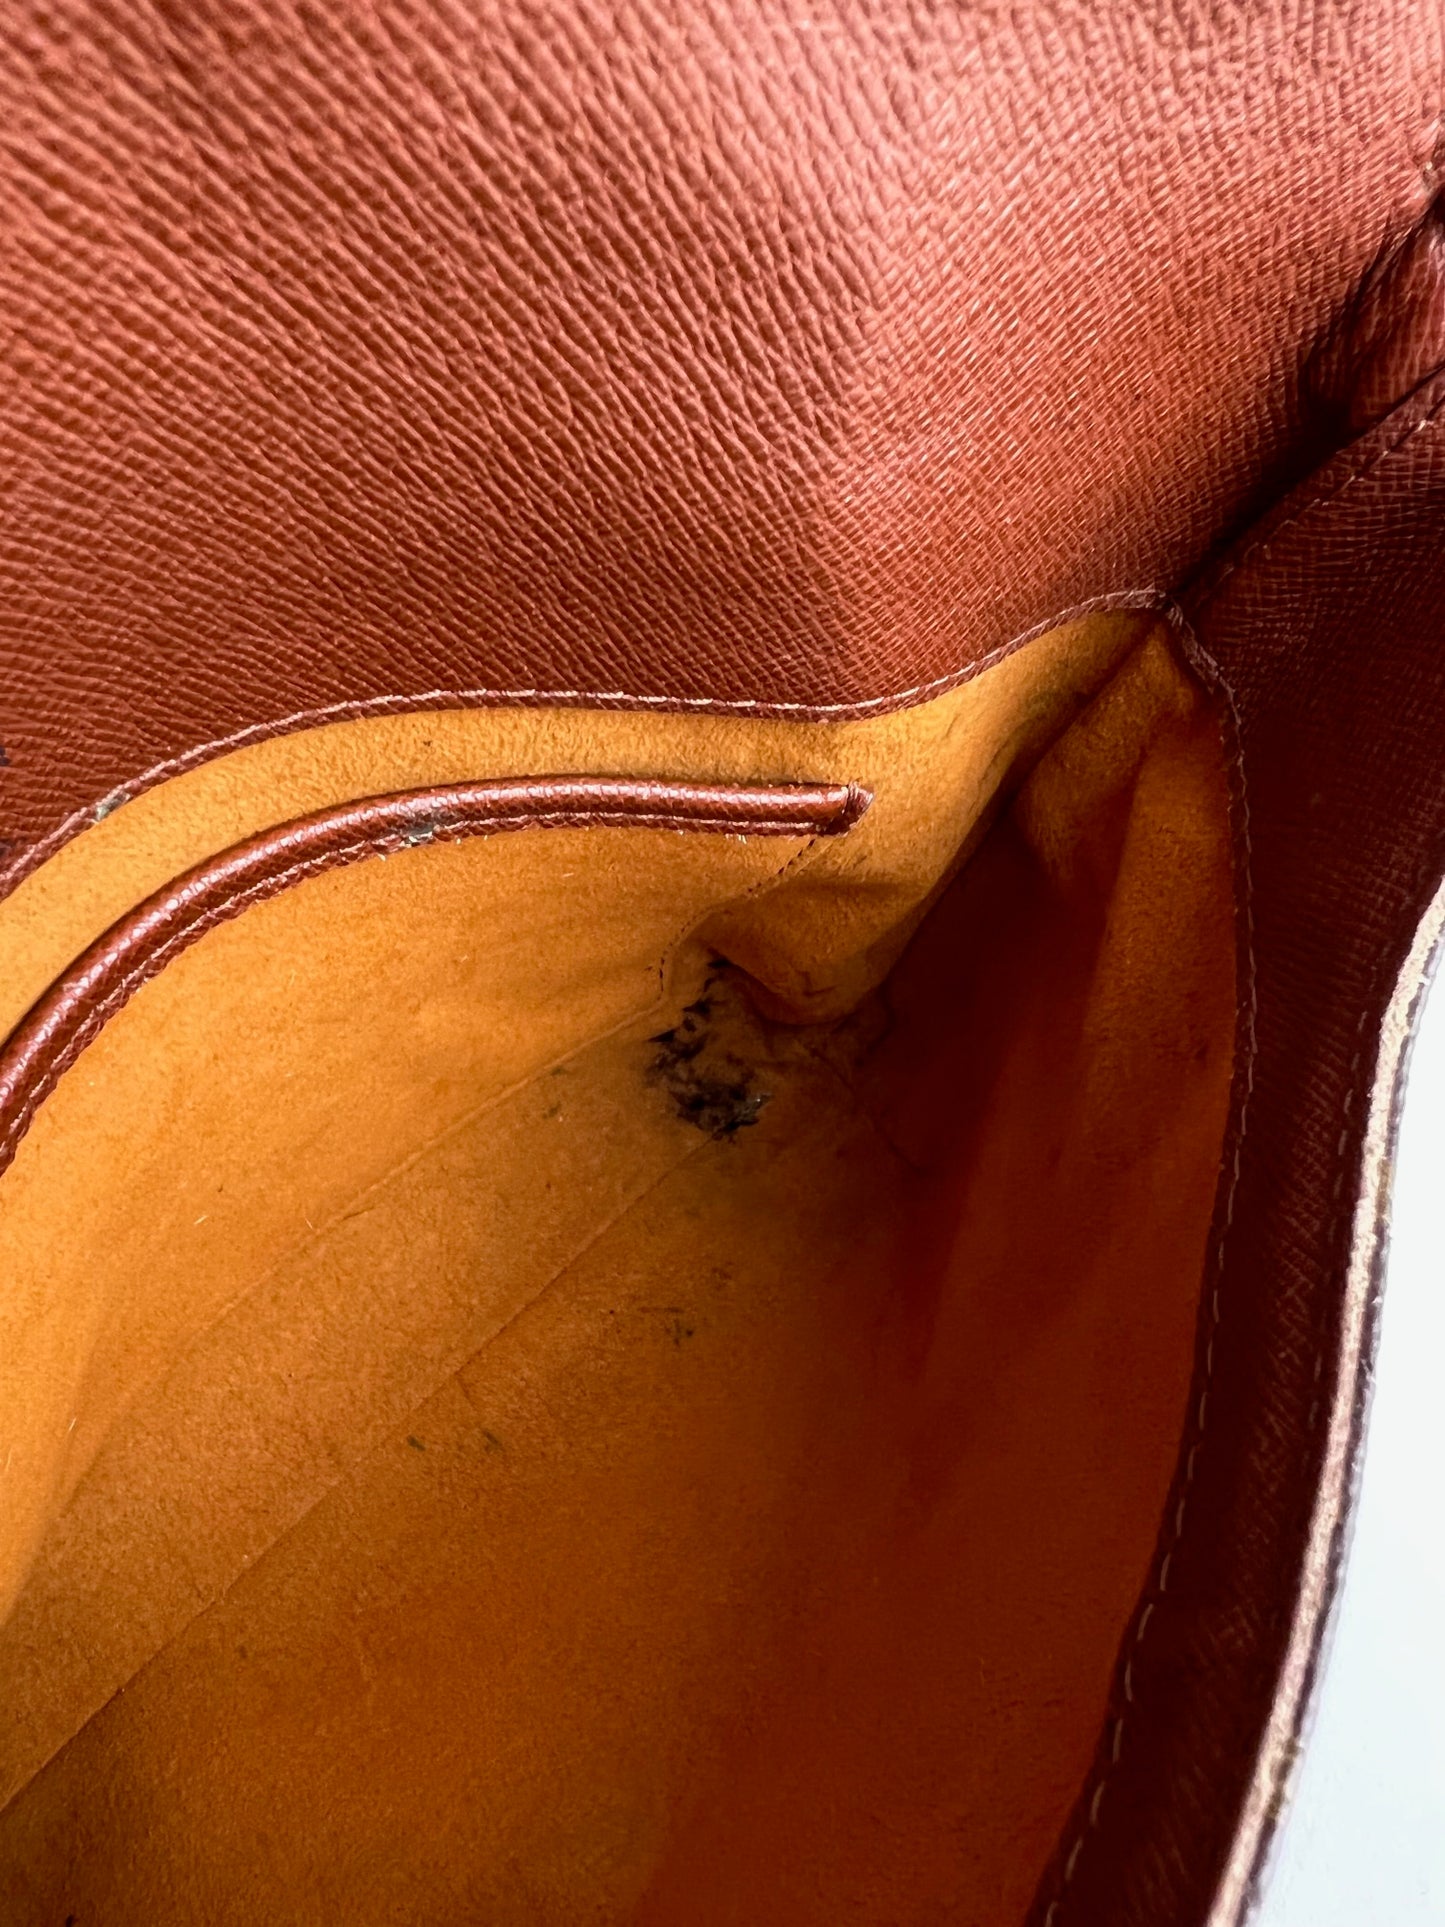 KOMEHYOLOUIS VUITTON Monogram Musette Tango M51257 Shoulder Bag